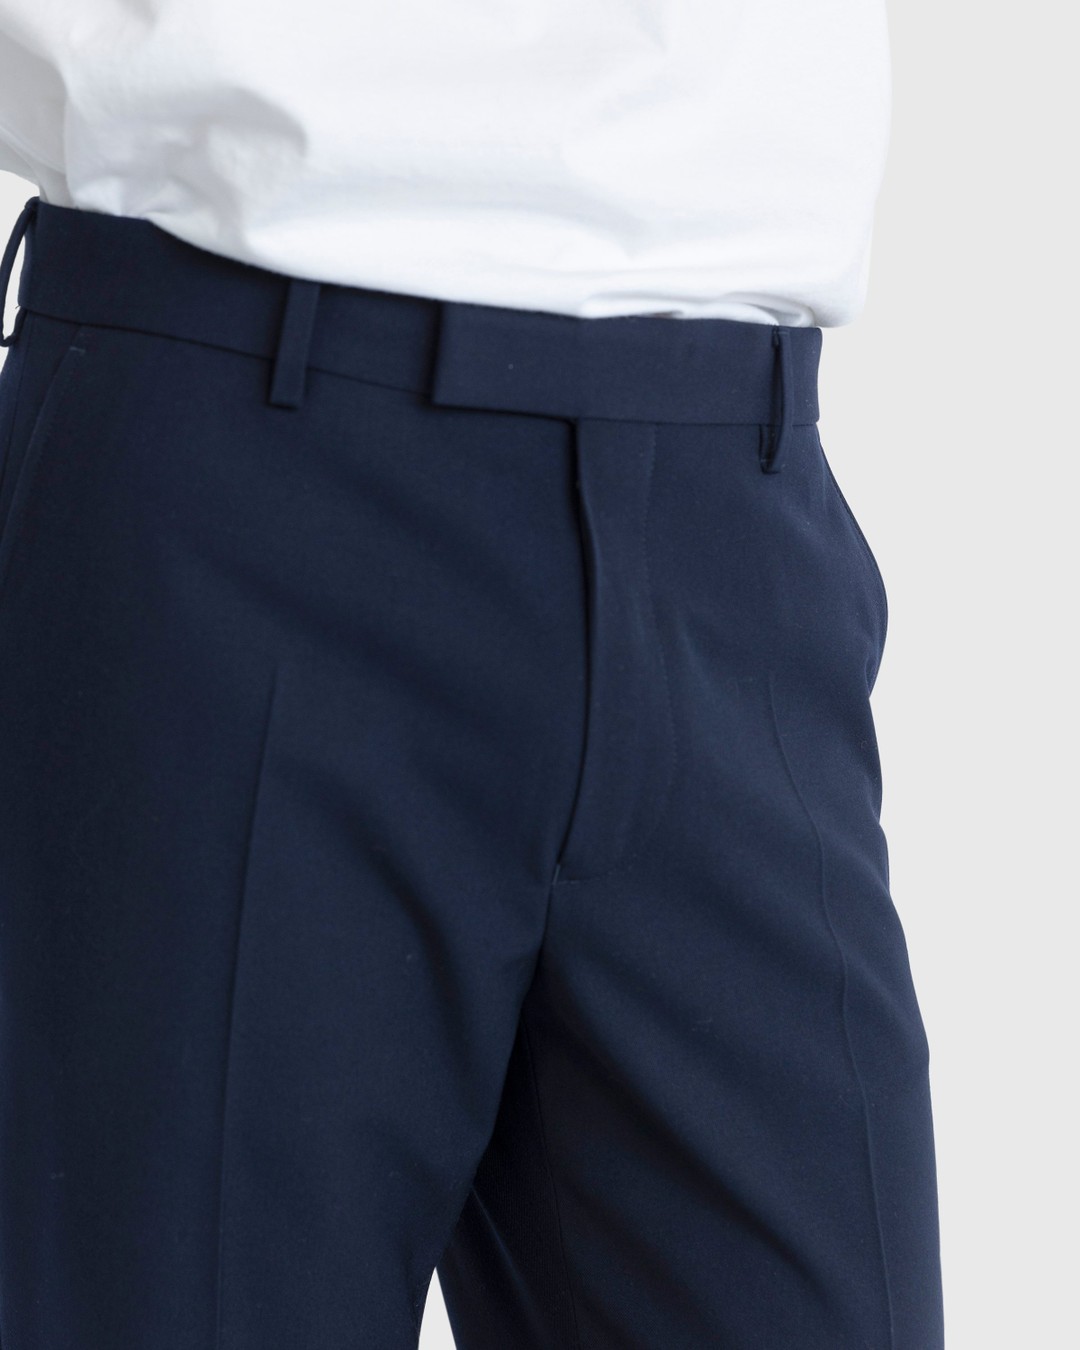 Dries van Noten – Pinnet Long Pants Blue - Pants - Blue - Image 5